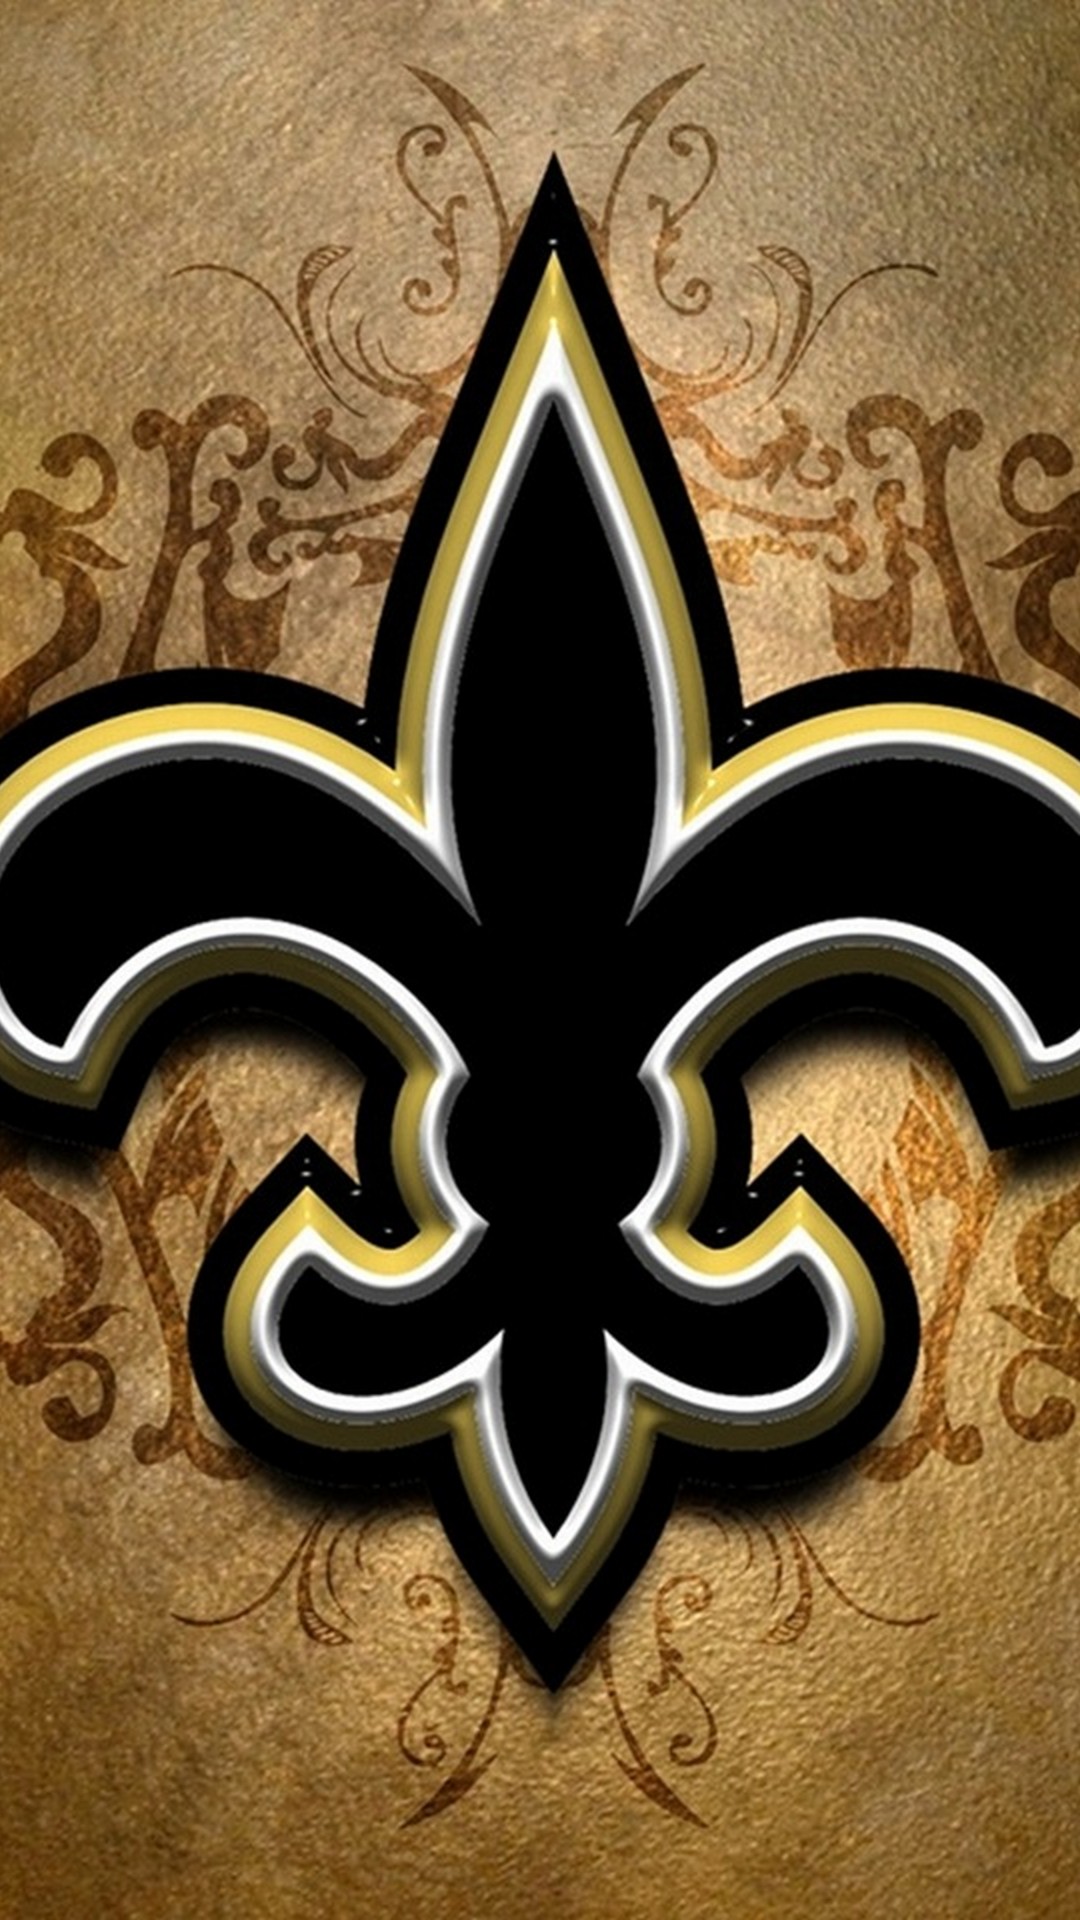 New Orleans Saints iPhone Screensaver 2021 NFL iPhone